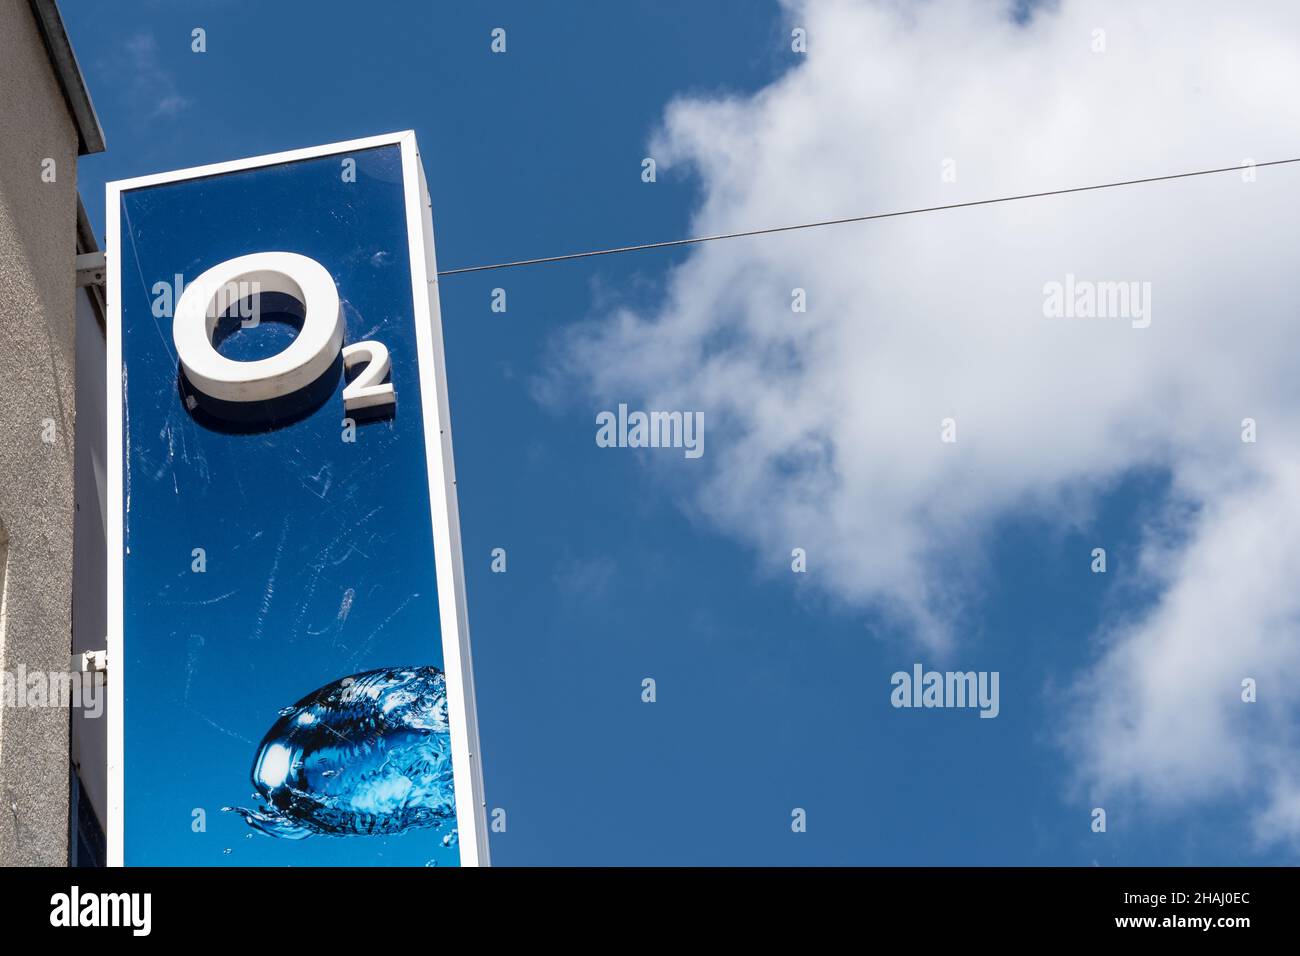 Firmenschild des Mobilfunkanbieters O2 an einer Hausfassade vor blauem Himmel Banque D'Images